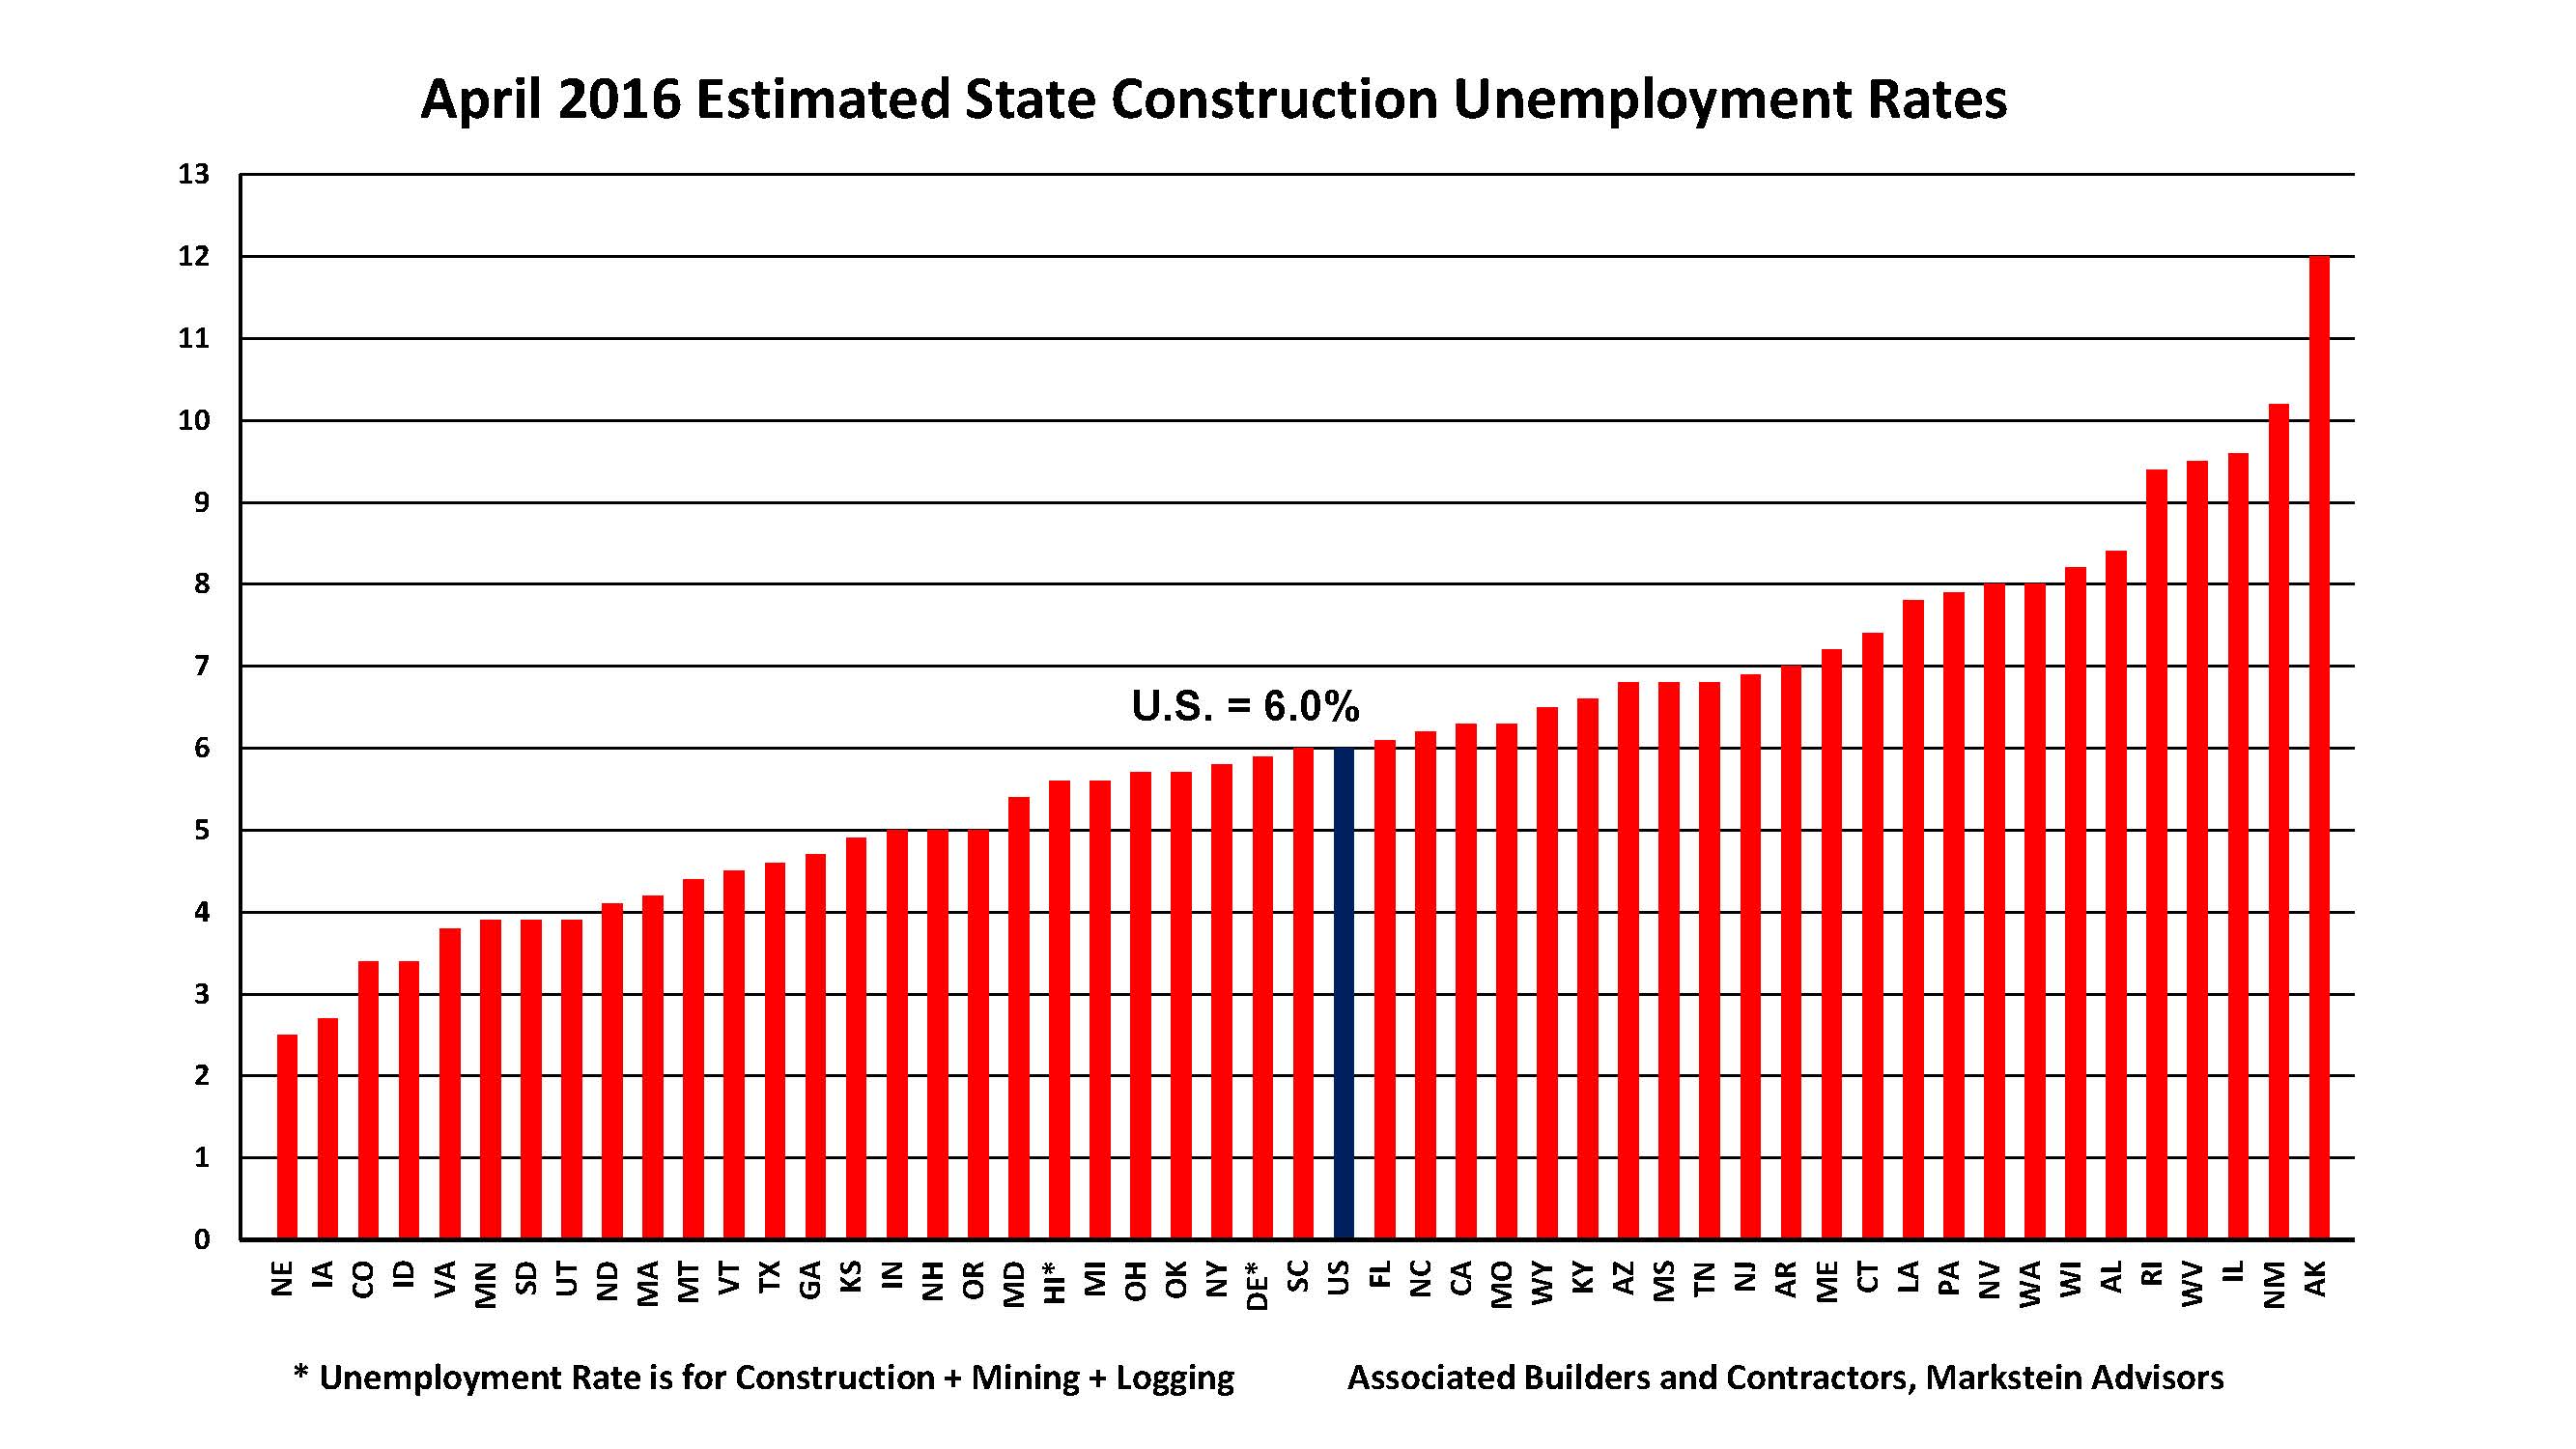 State Construction Unemployment Rates